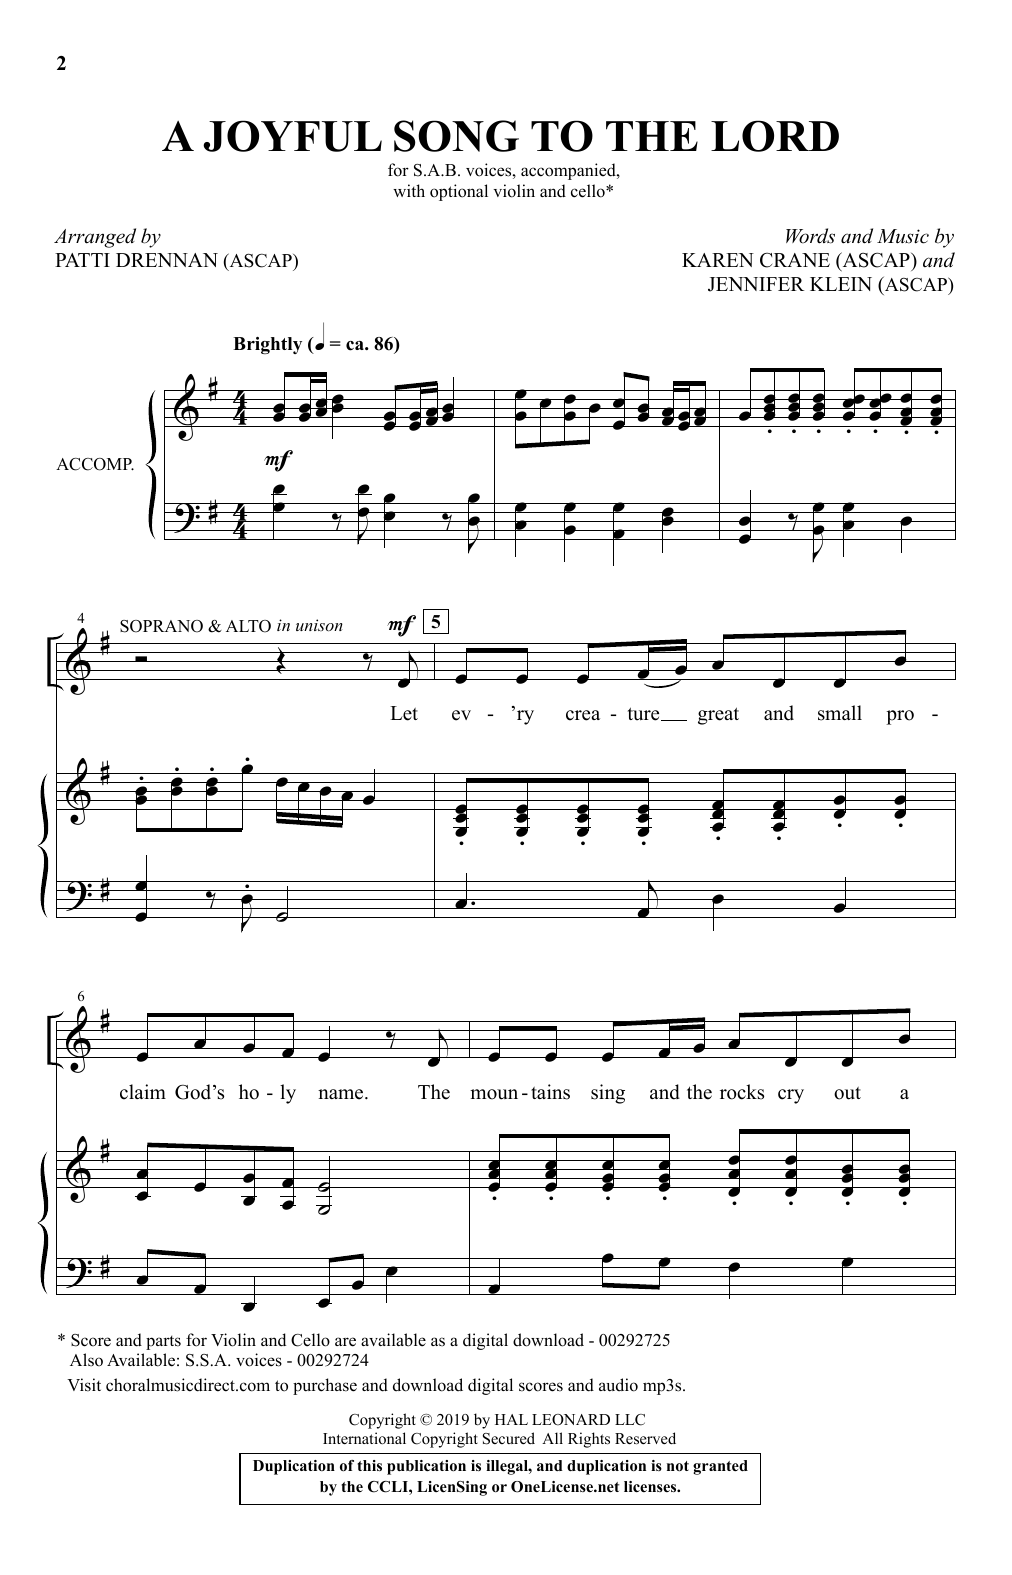 Download Karen Crane & Jennifer Klein A Joyful Song To The Lord (arr. Patti Drennan) Sheet Music and learn how to play SSA Choir PDF digital score in minutes